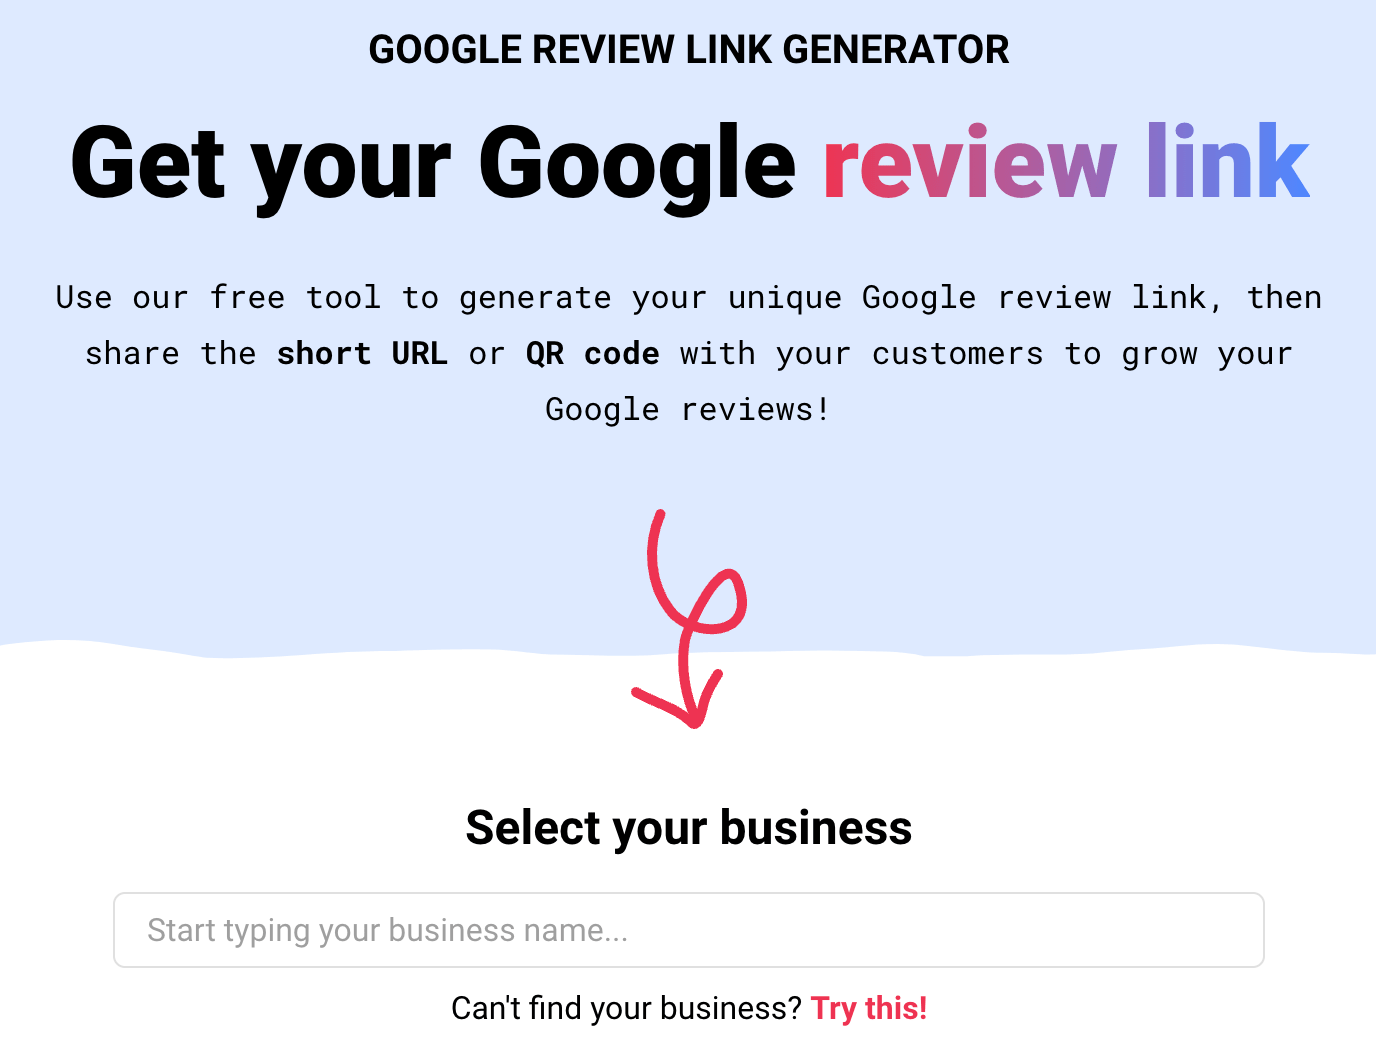 WhiteSpark’s Google Review Link Generator